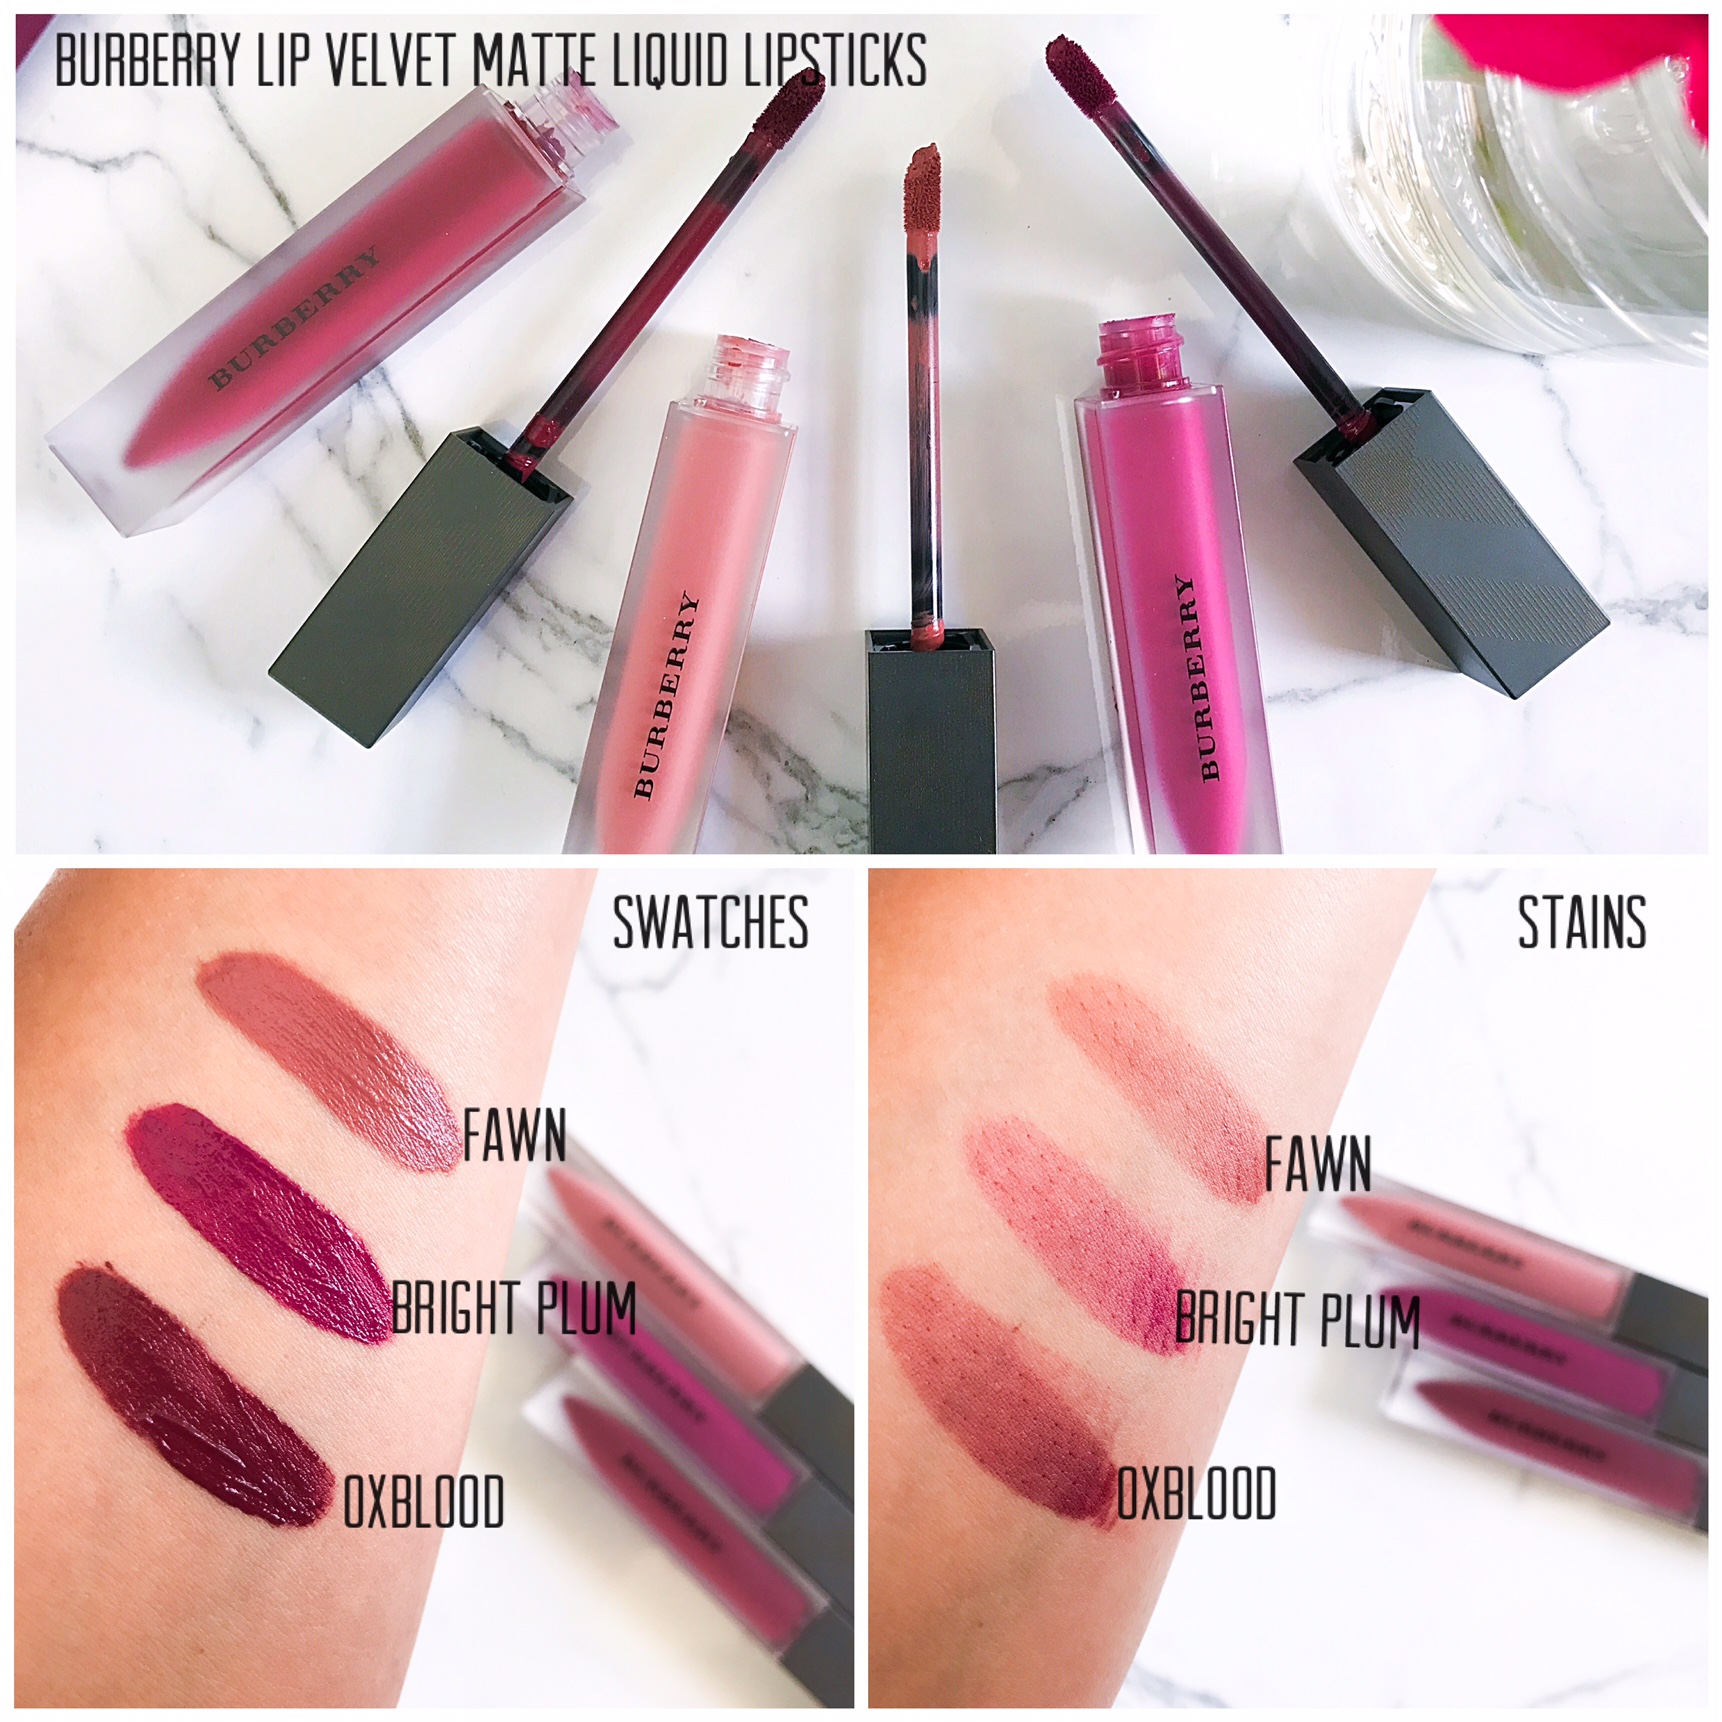 burberry lipstick shades